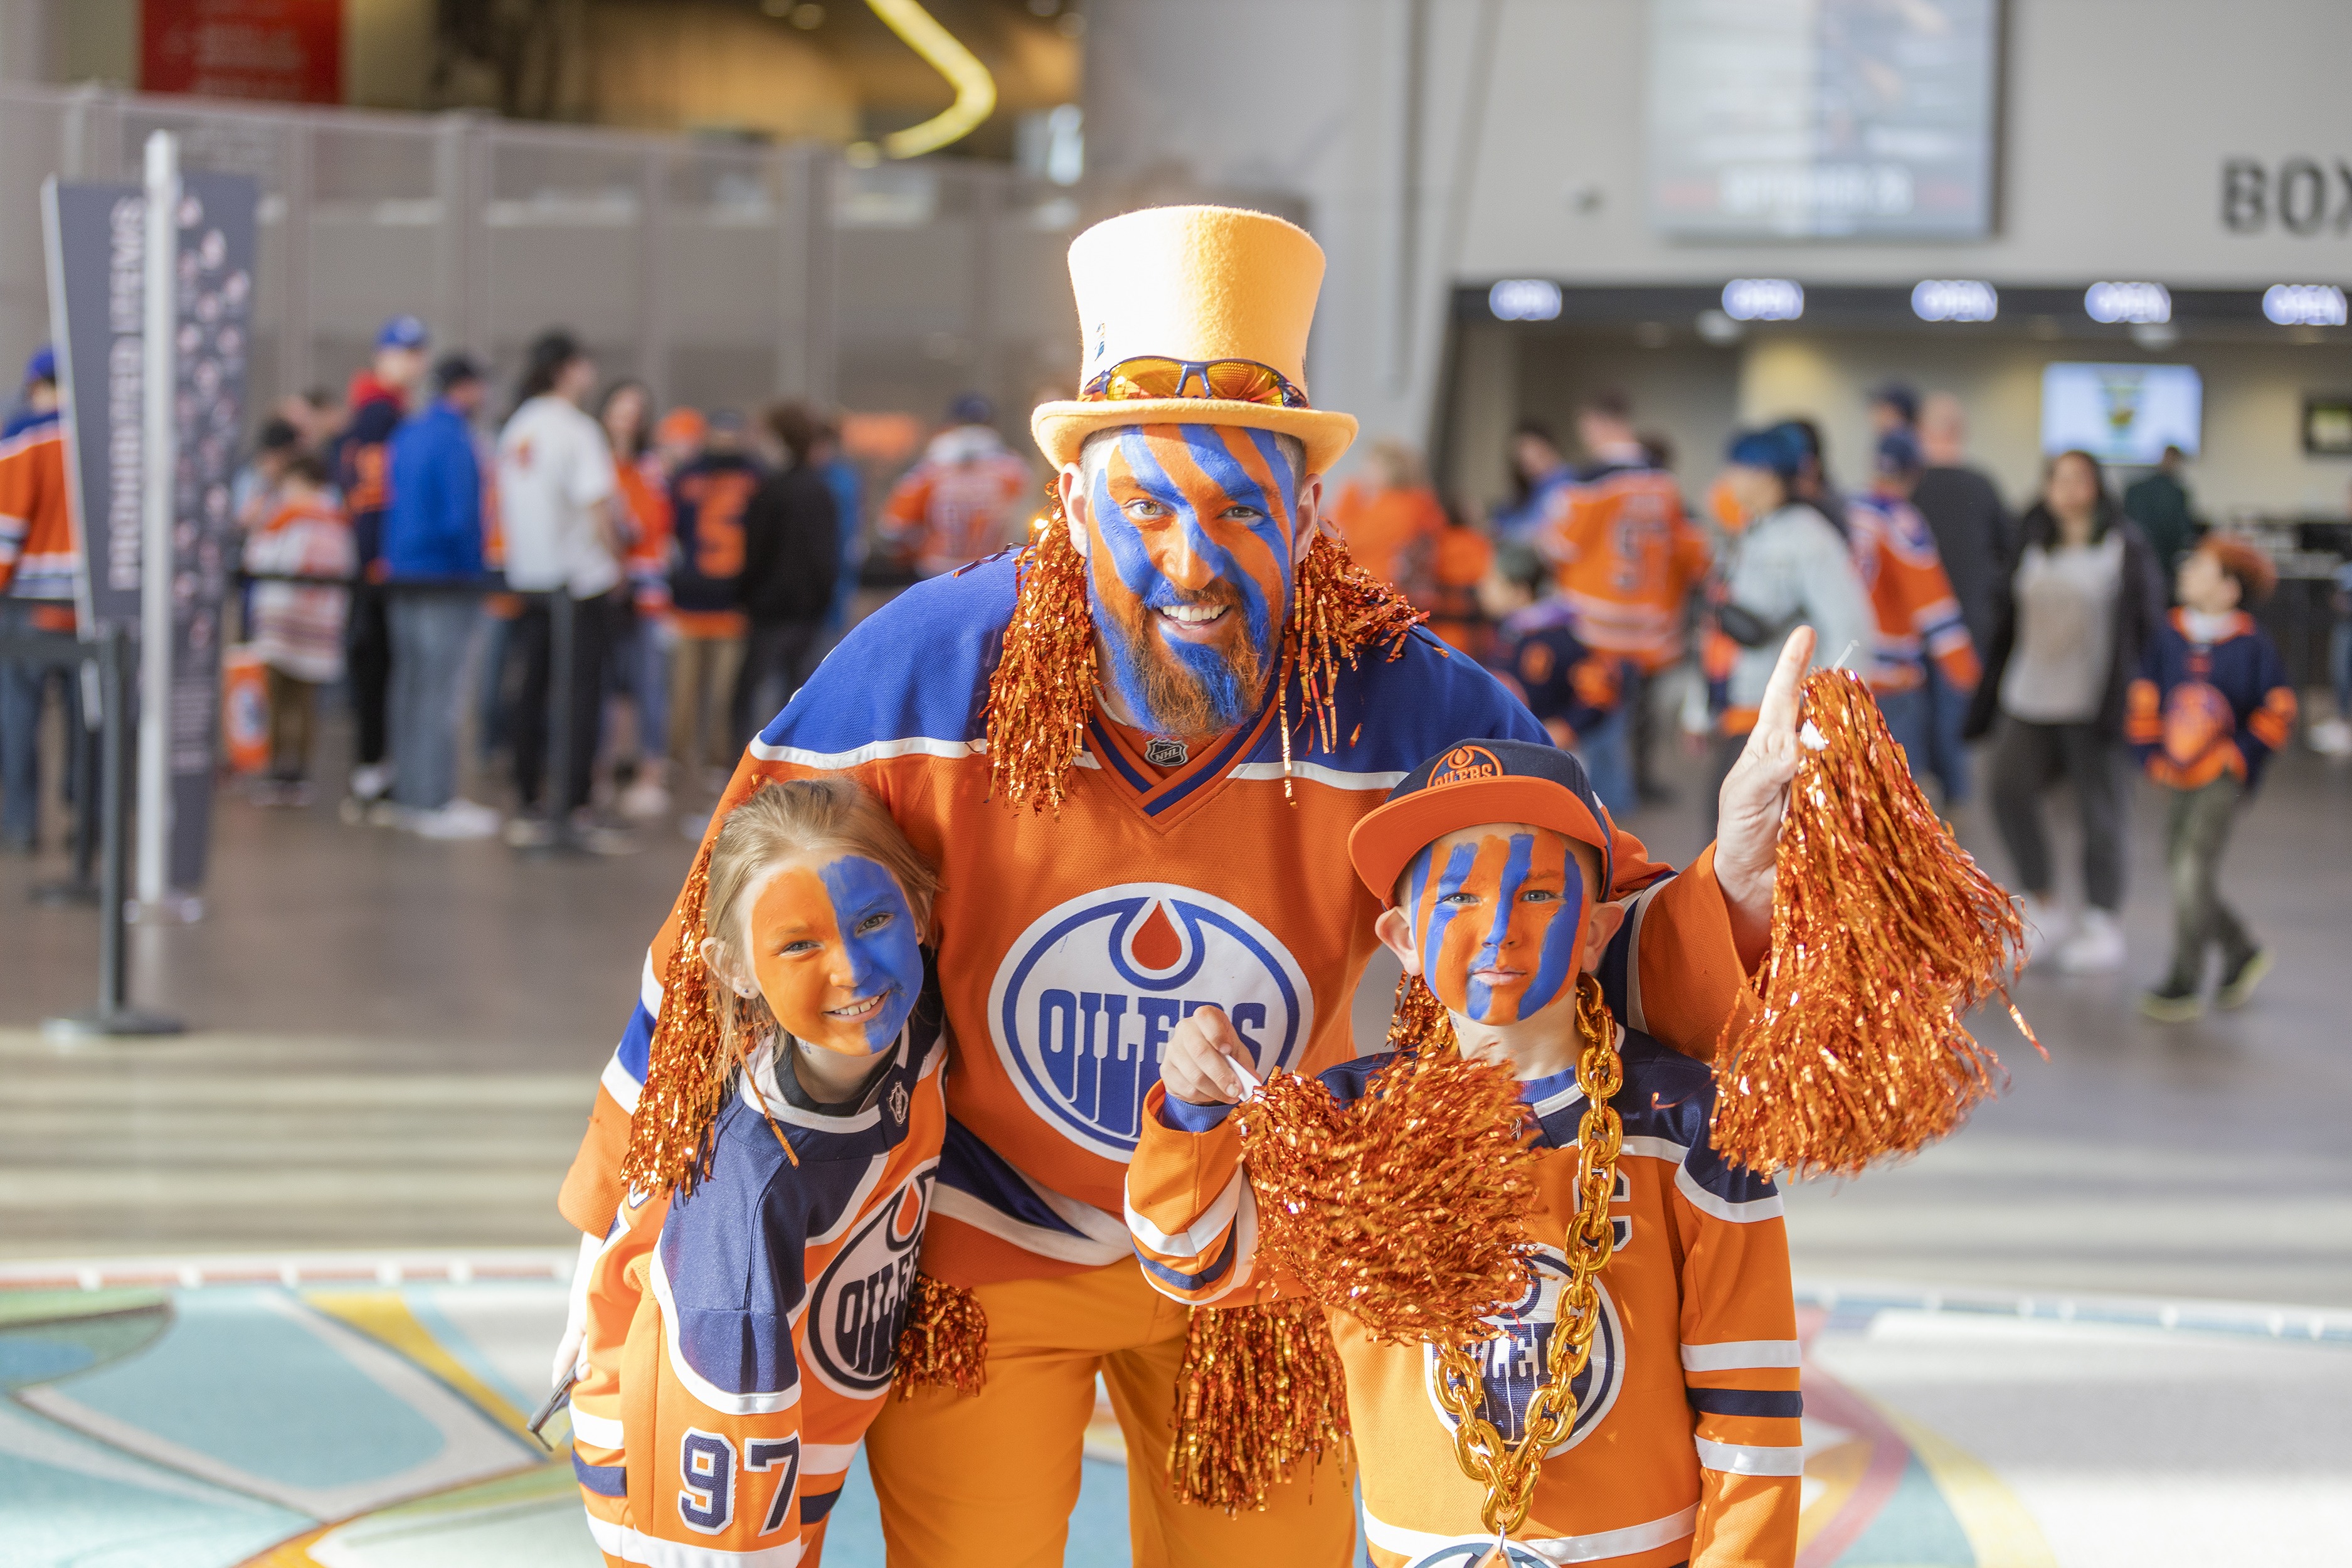 Edmonton Oilers fans show their high-octane team spirit